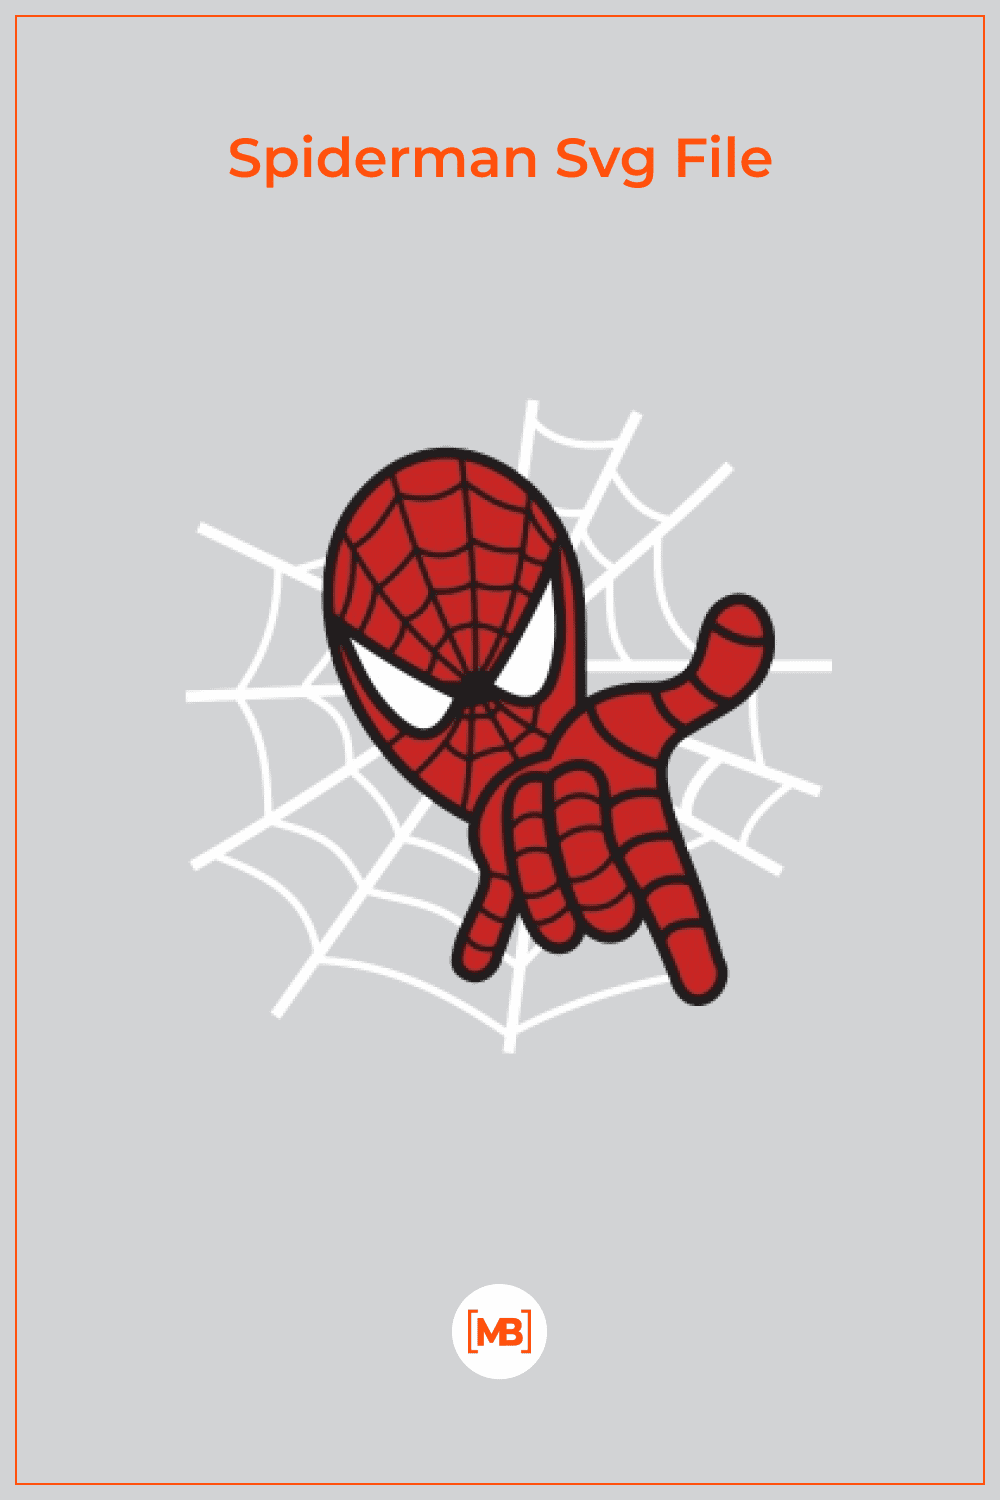 Spiderman Svg File.